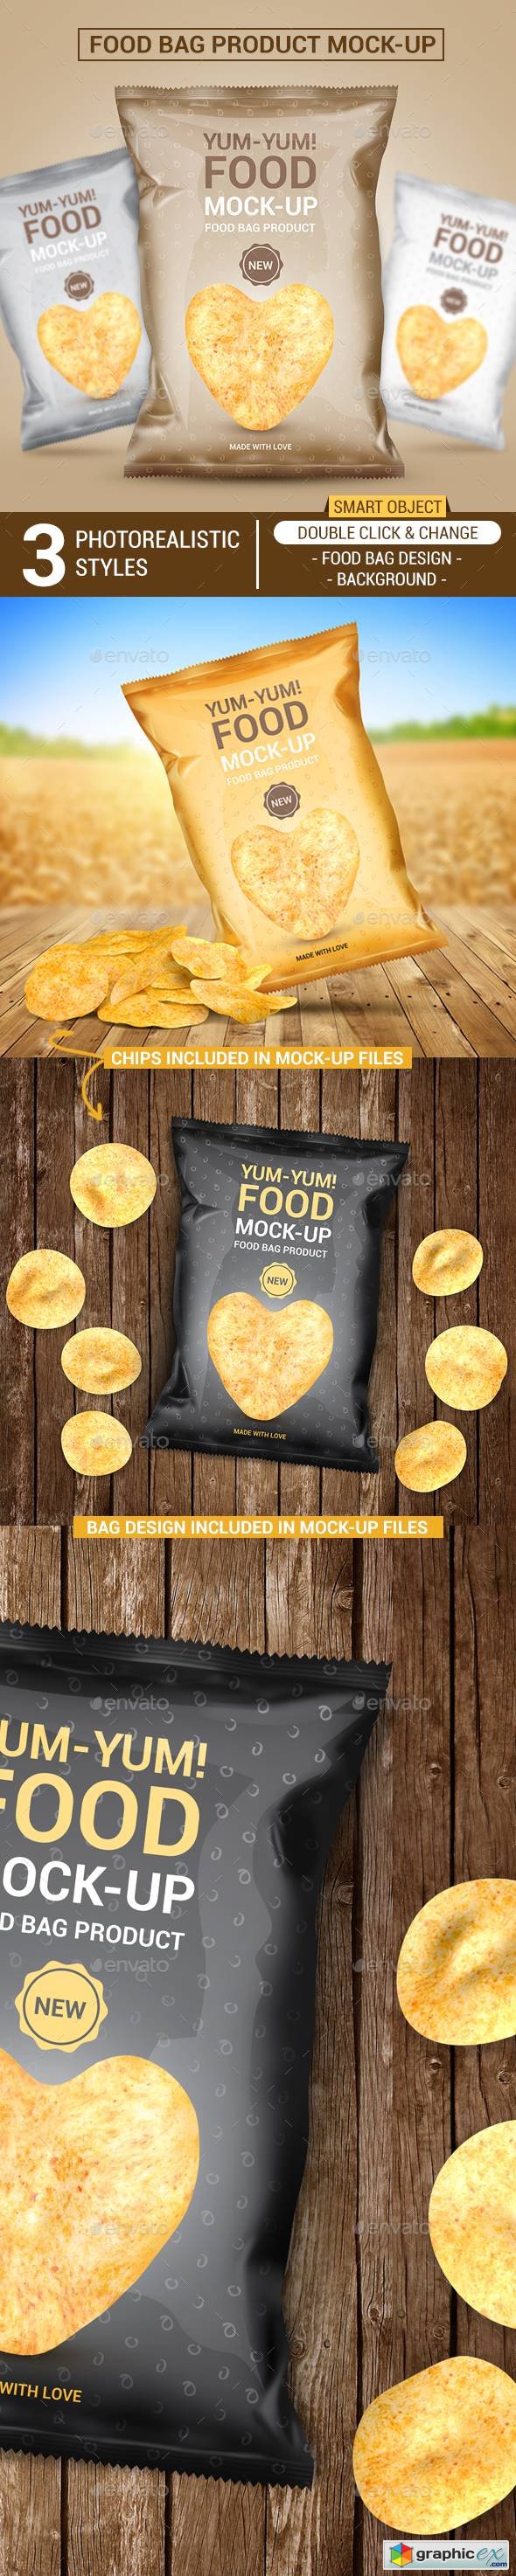 Food Bag Product Mock-Ups